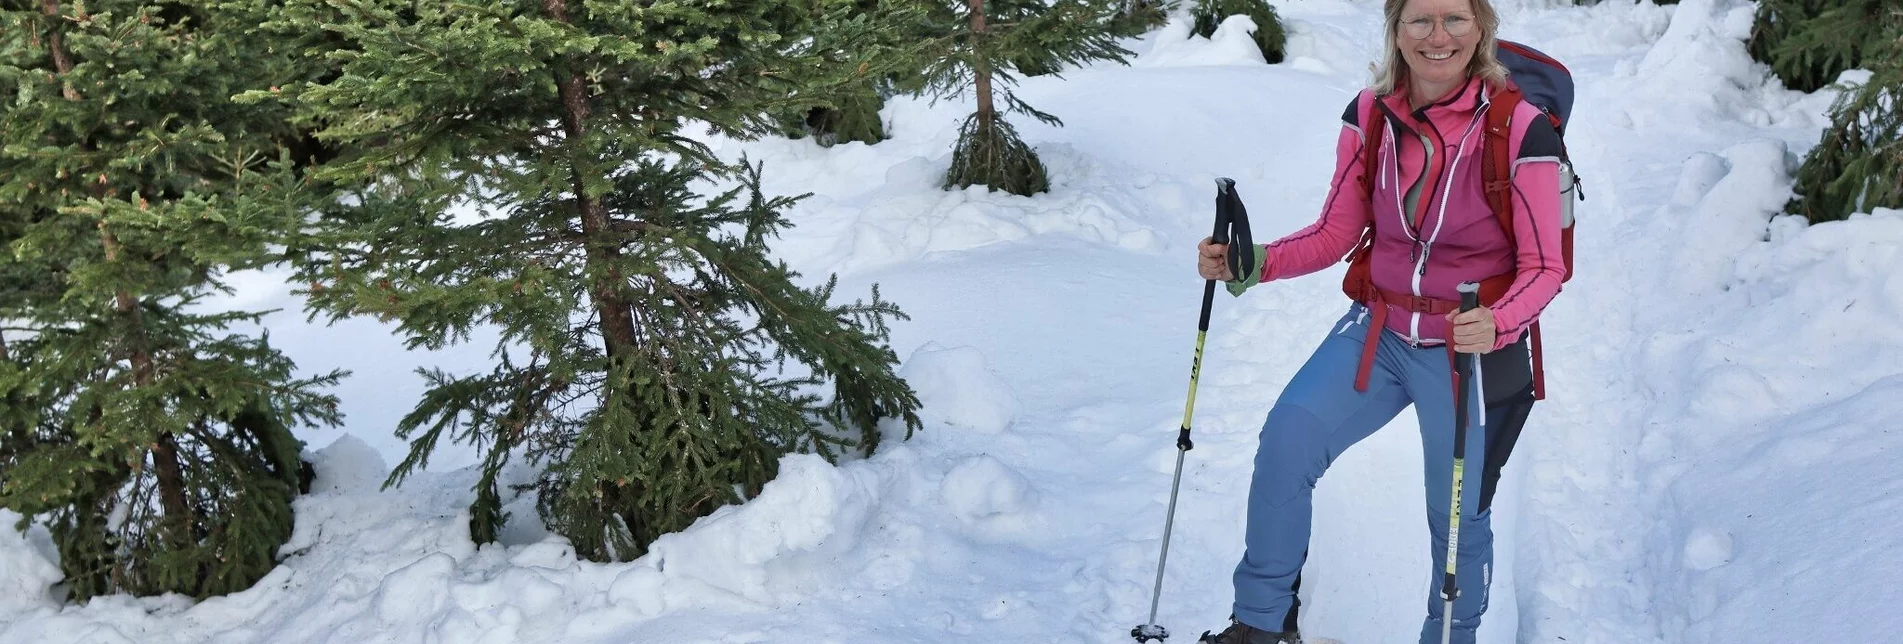 Snowshoe walking Schneeschuhwanderung Dreieckkogel - Touren-Impression #1 | © Weges OG